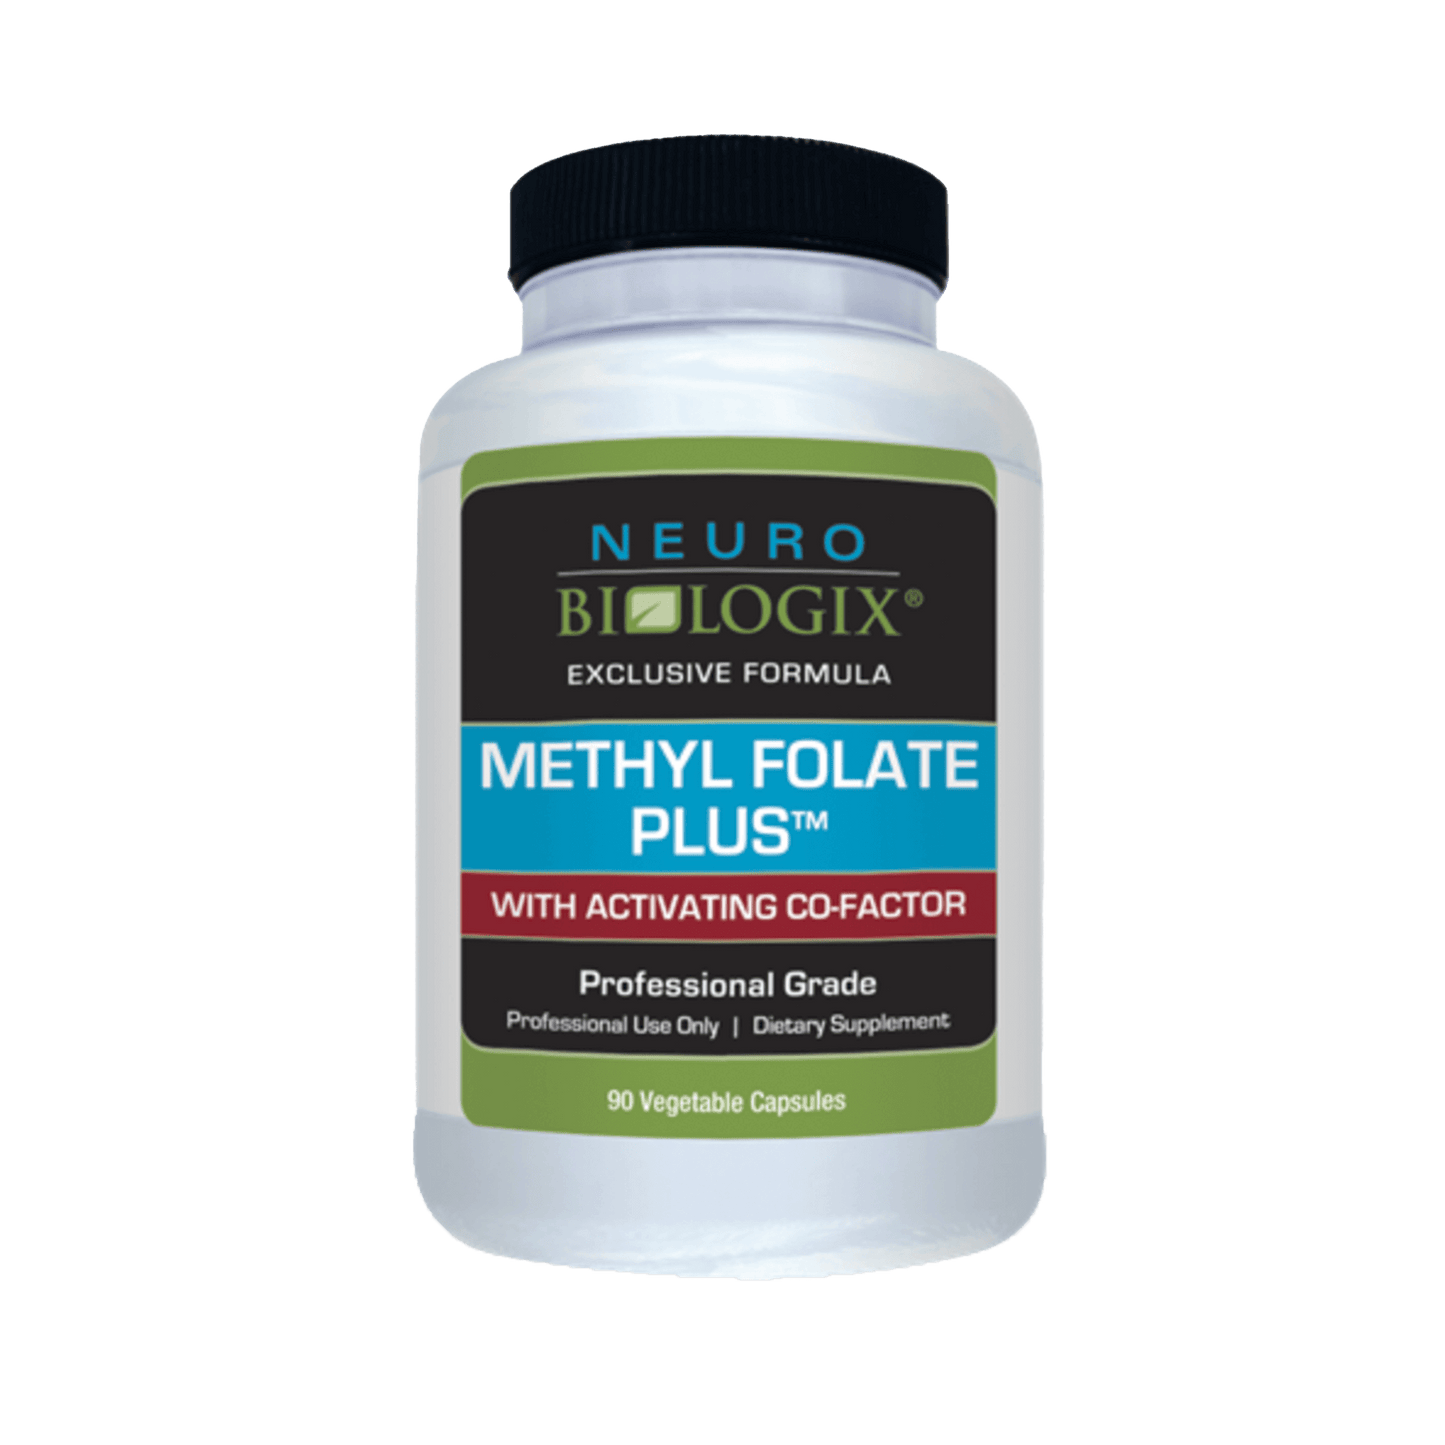 NBX Wellness Methyl Folate Pro Capsules